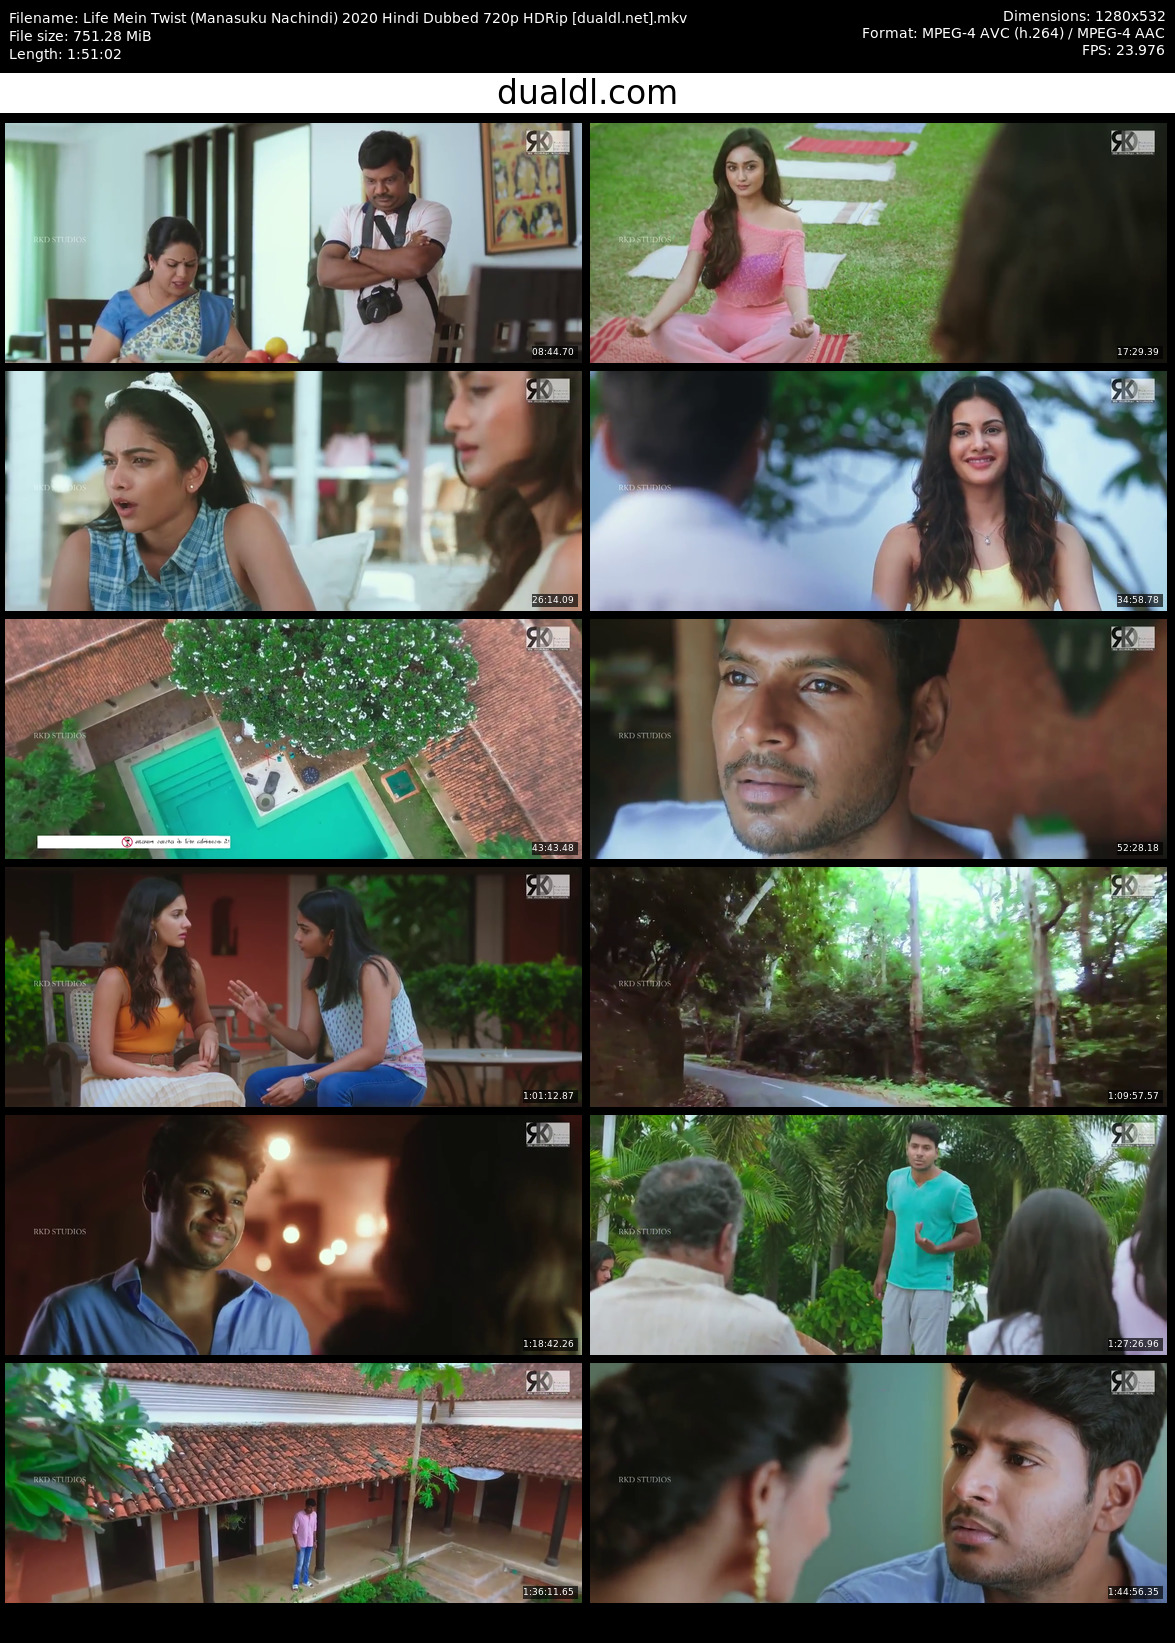 Jajantaram Mamantram man movie in hindi 720p